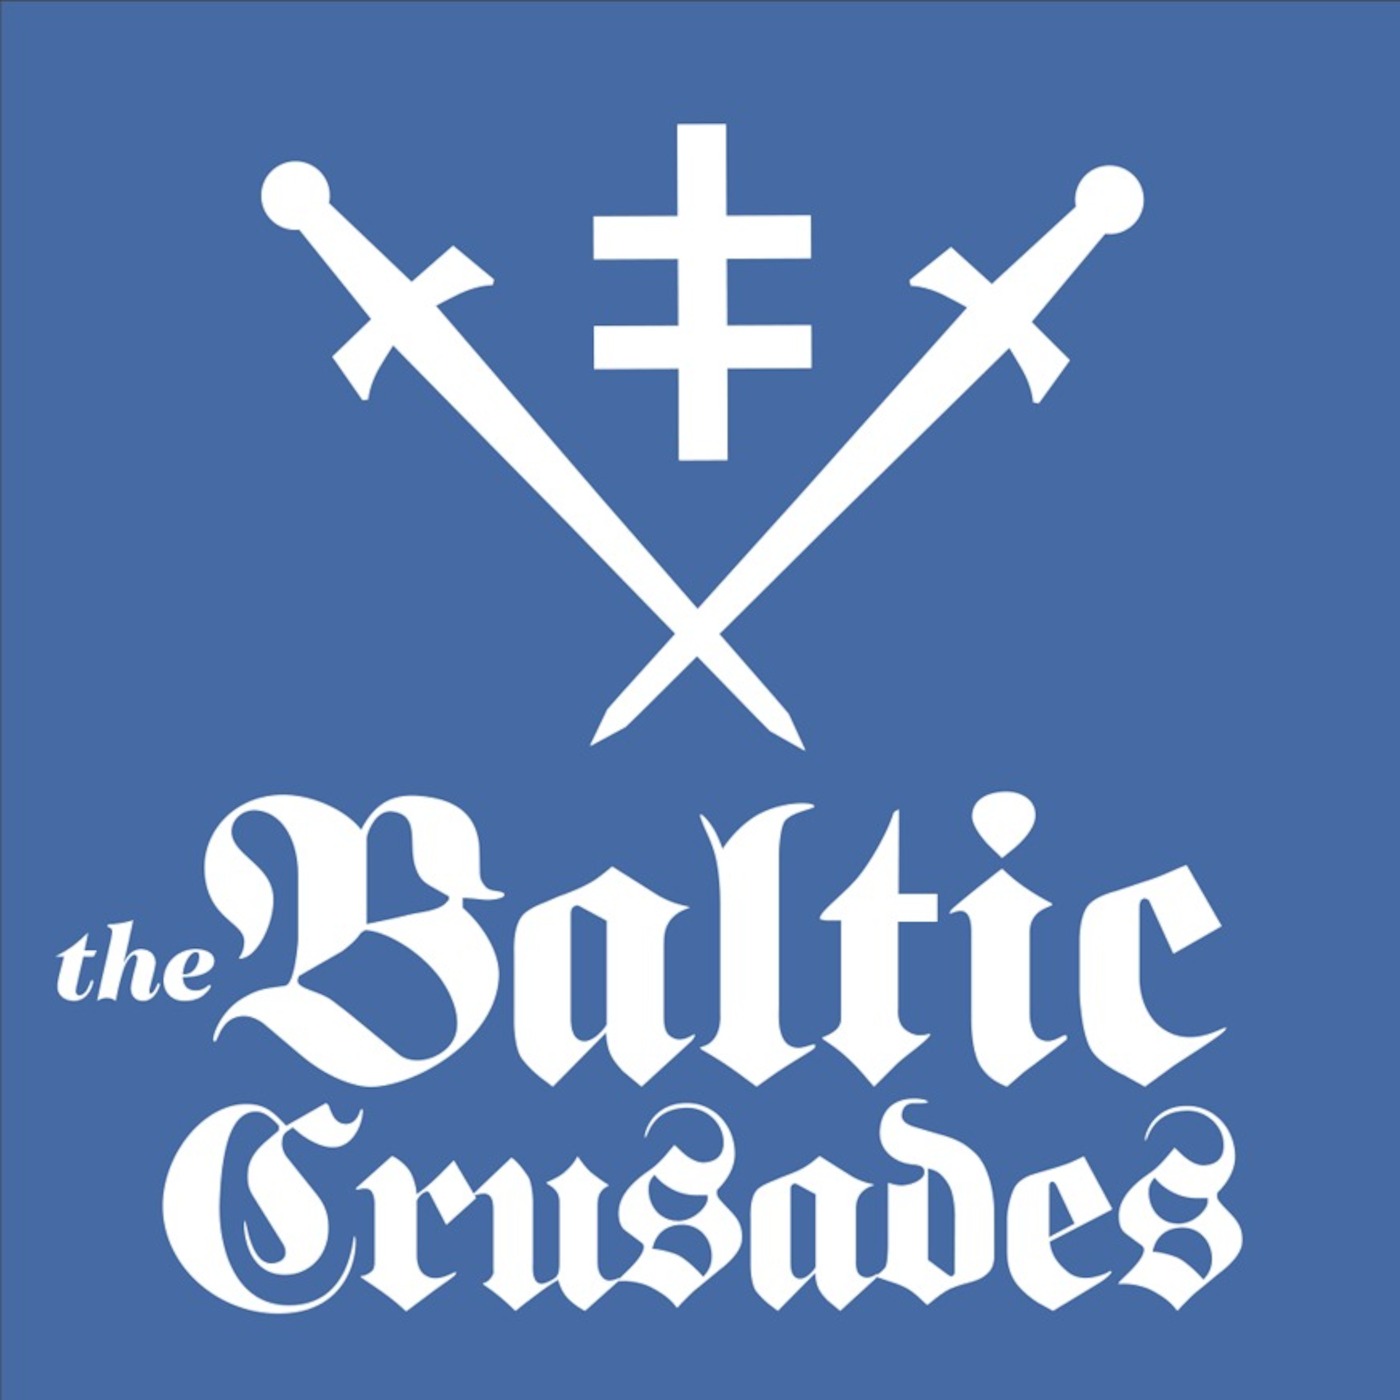 Episode 225 - The Baltic Crusades